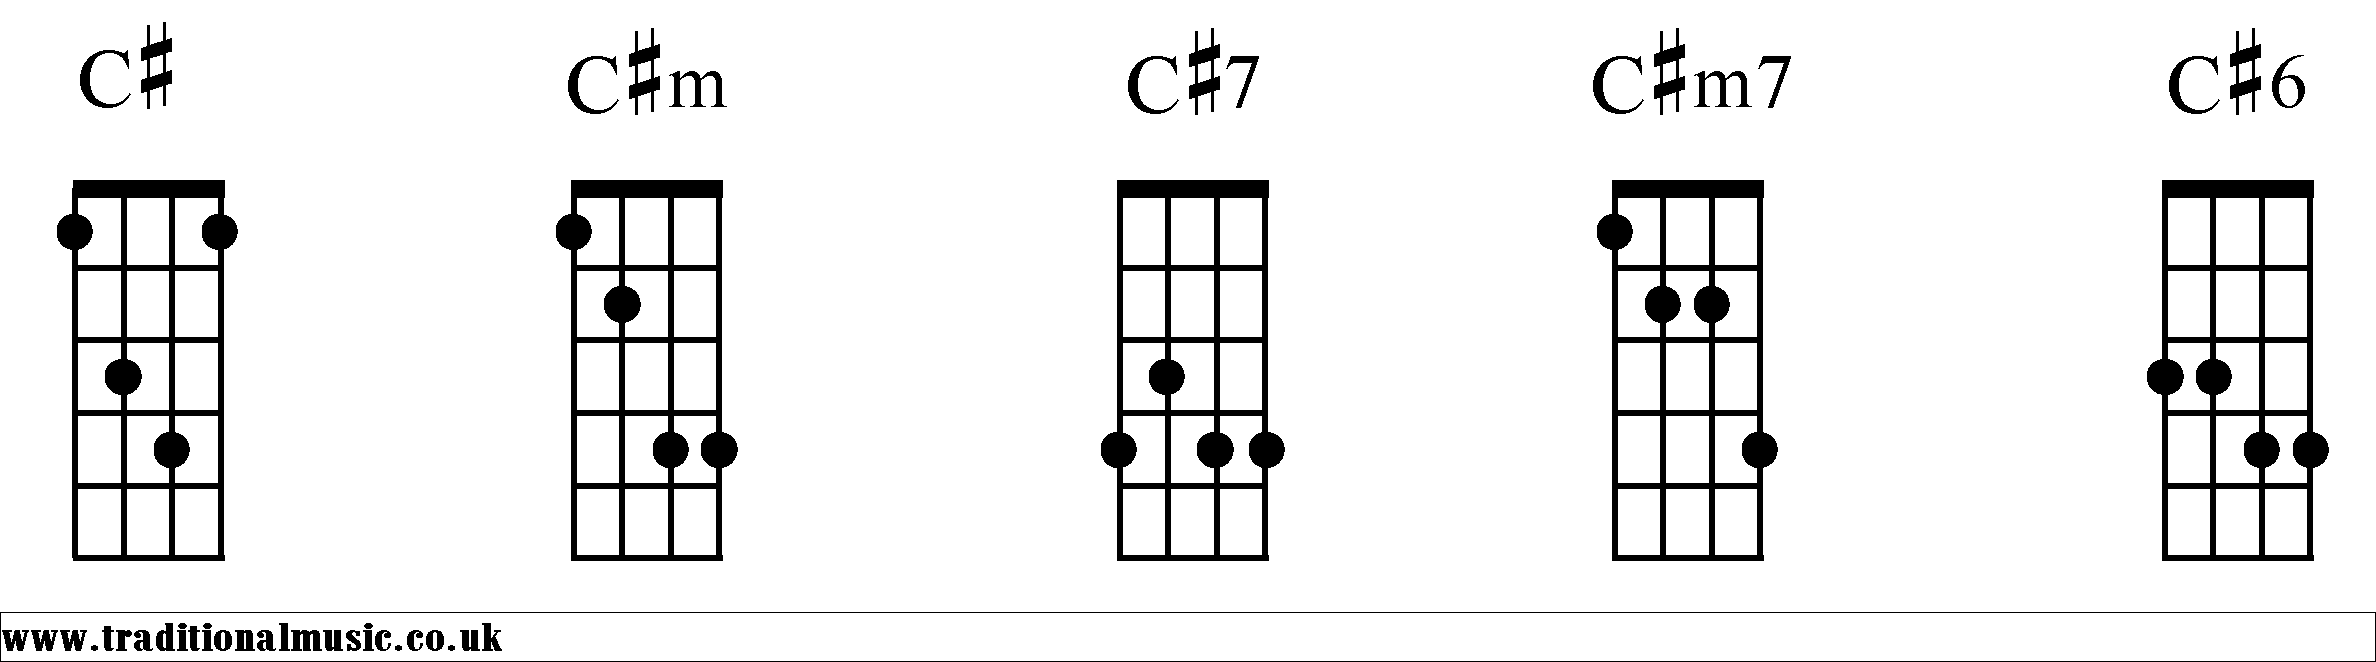 Chords starting C# for Mandolin in standard tuning.